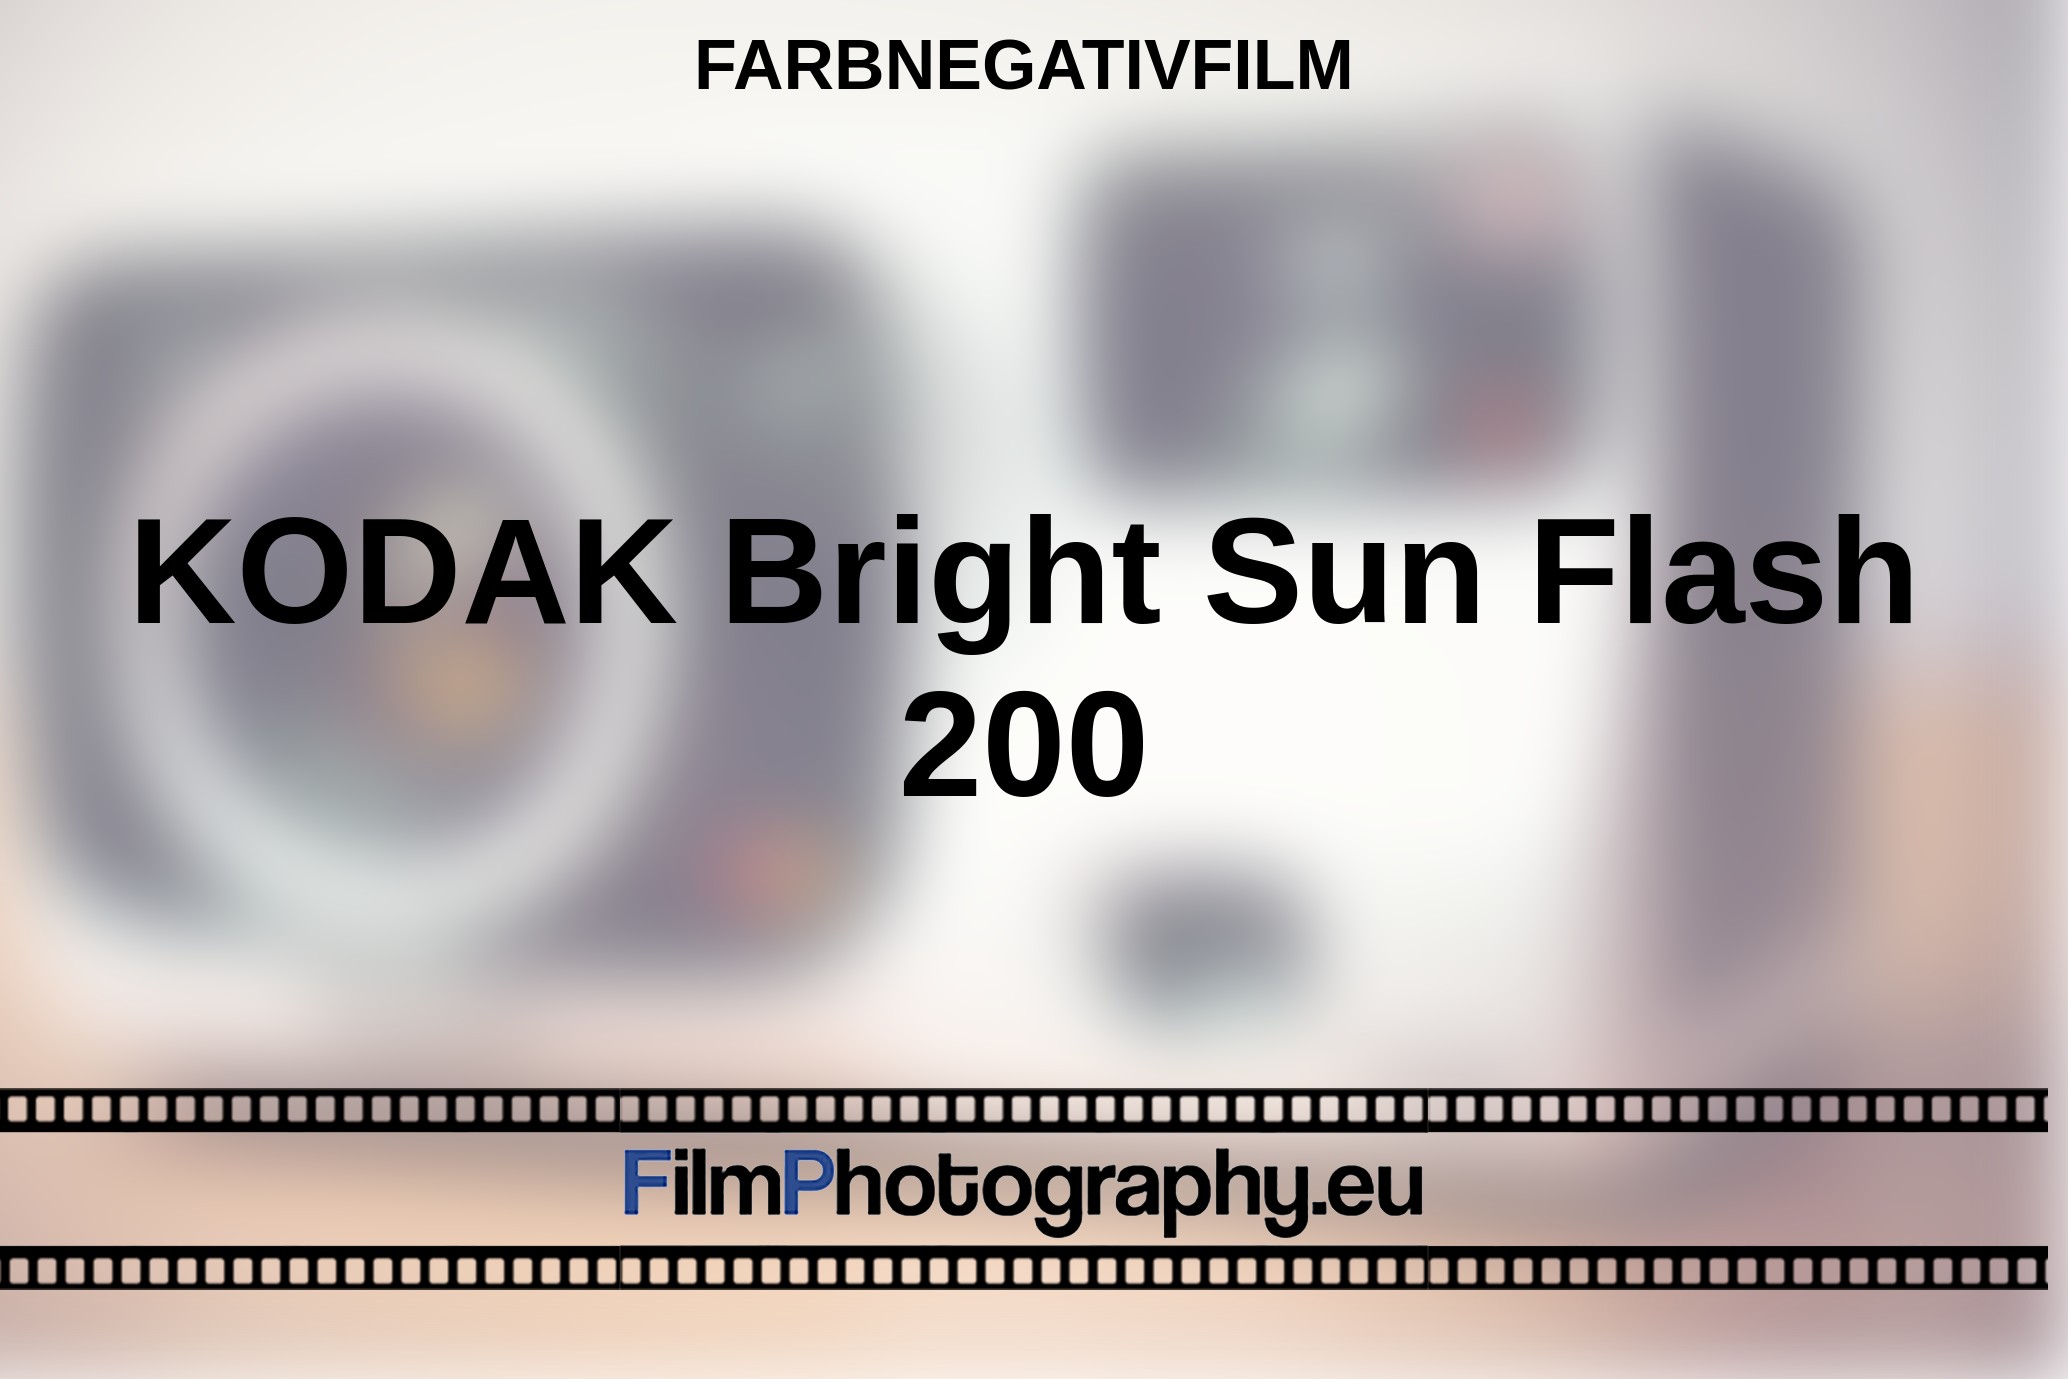 KODAK-Bright-Sun-Flash-200-Farbnegativfilm-bnv.jpg